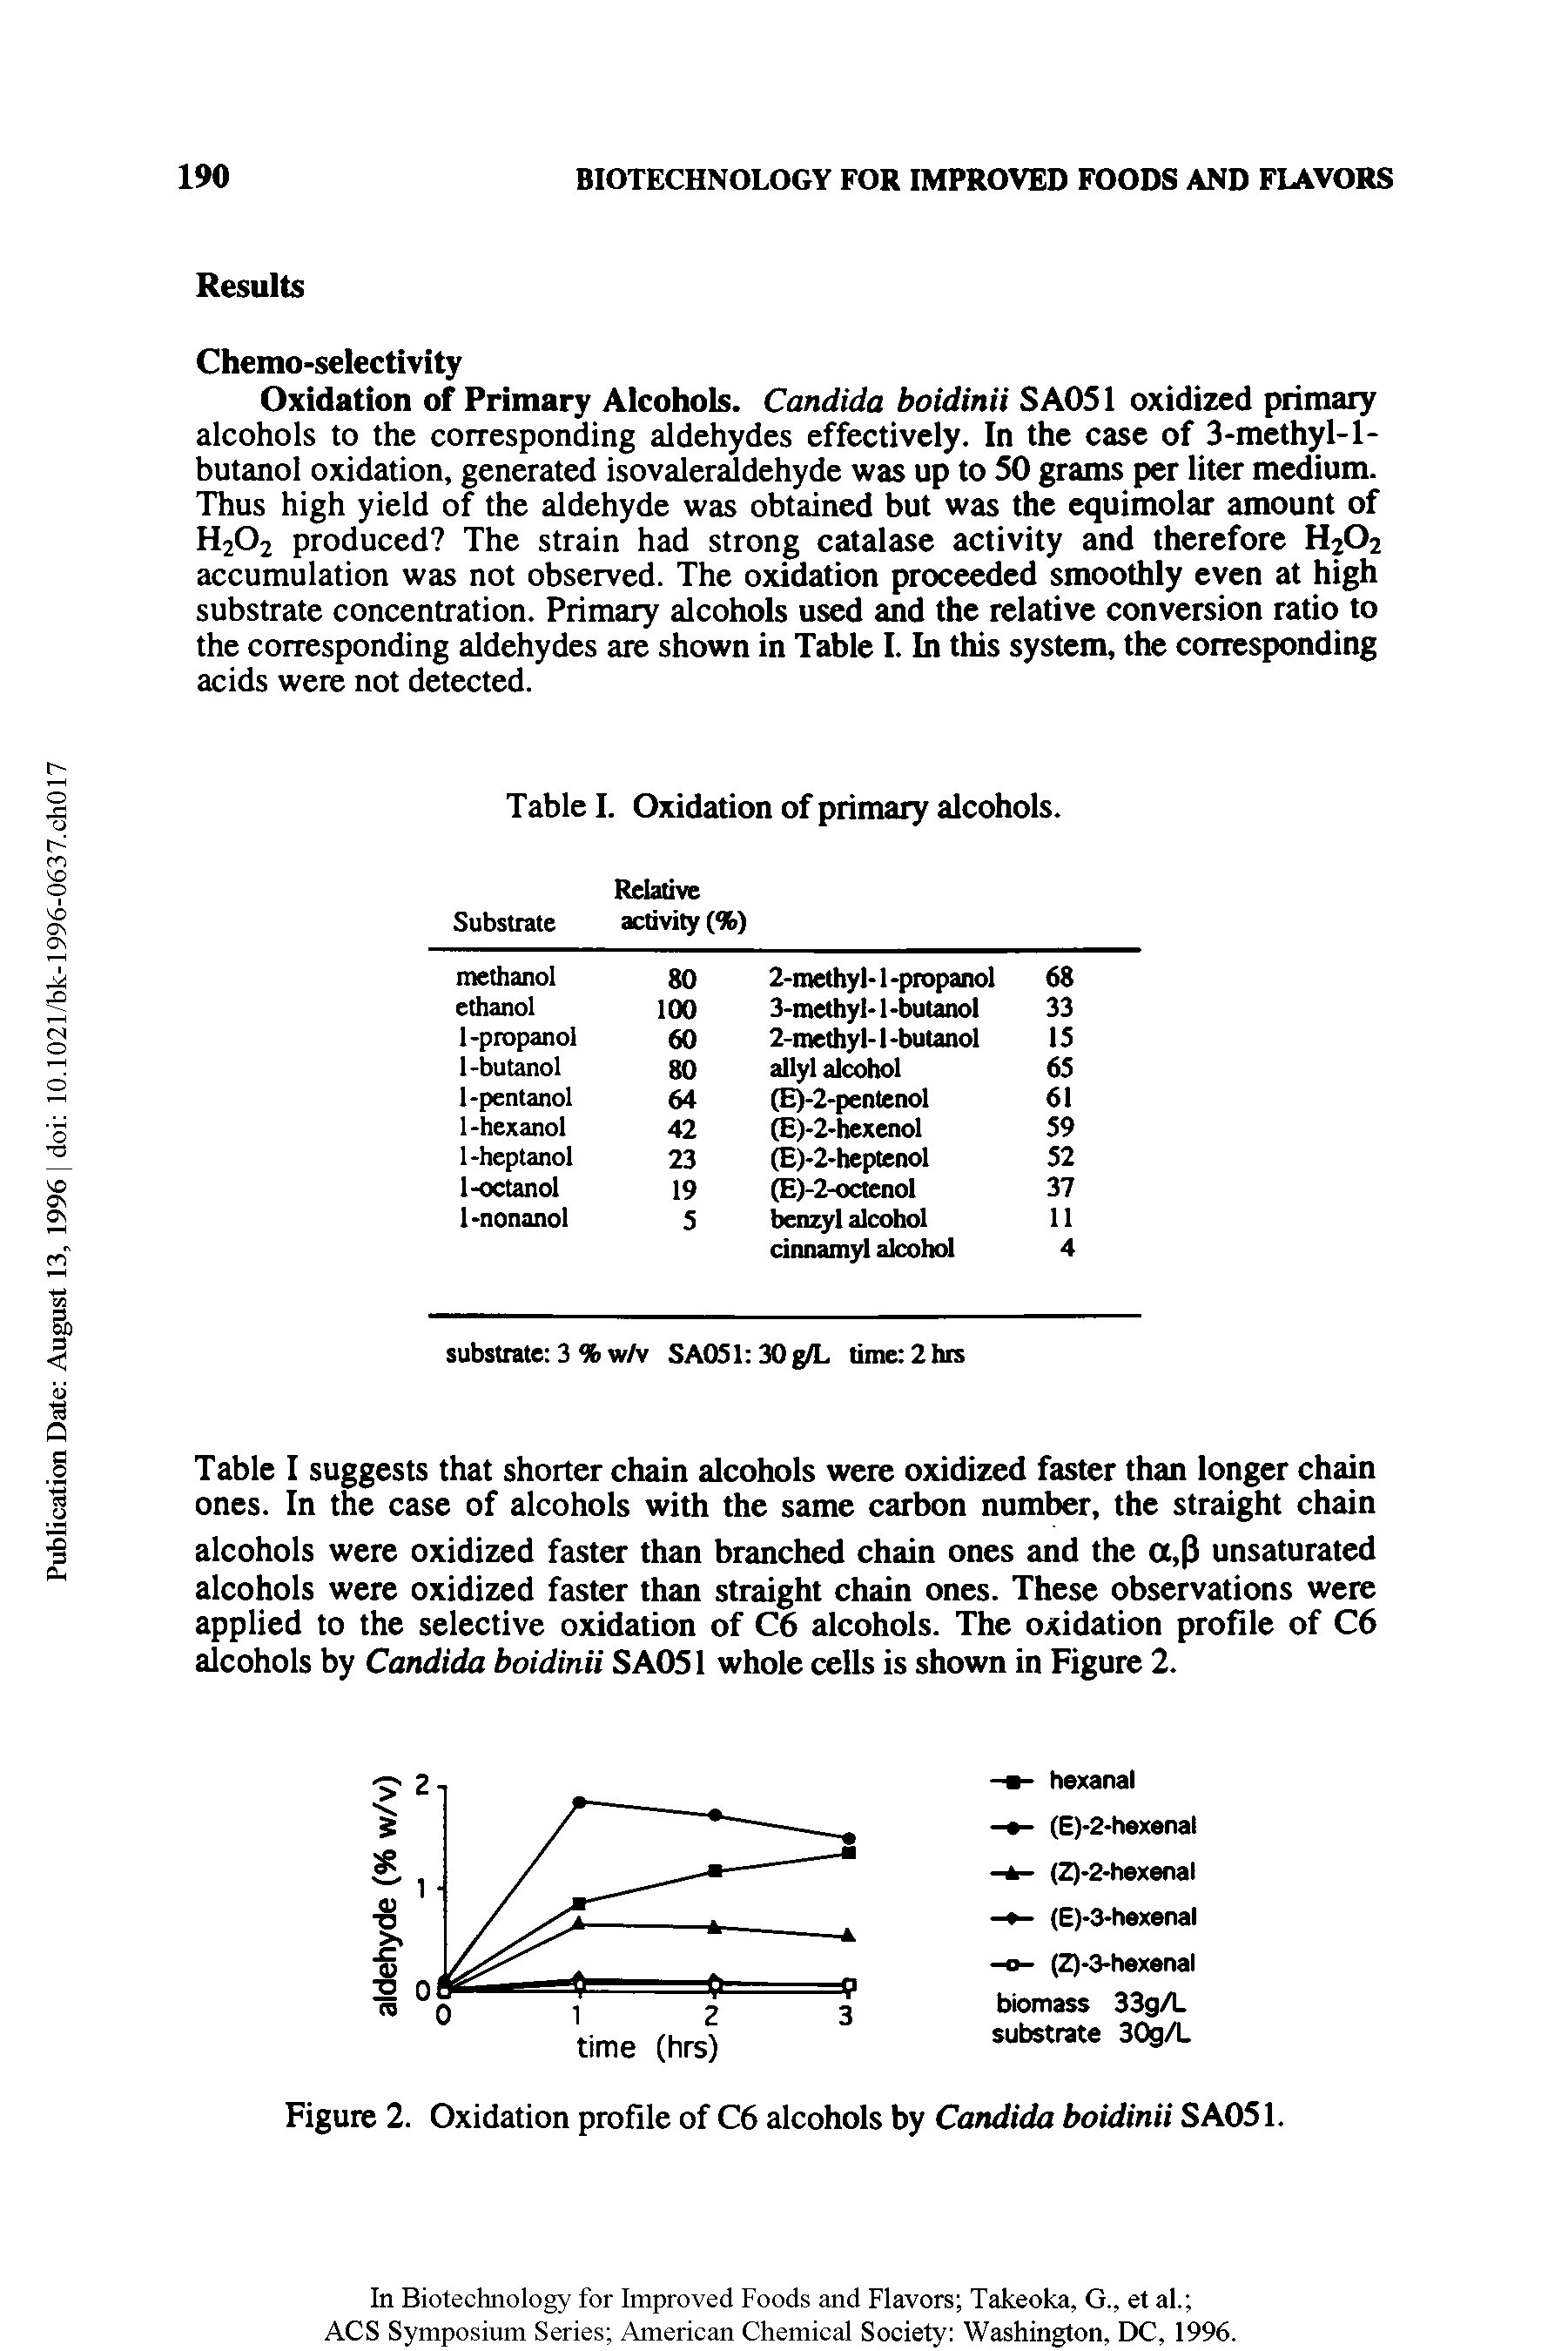 Figure 2. Oxidation profile of C6 alcohols by Candida boidinii SAOSl.